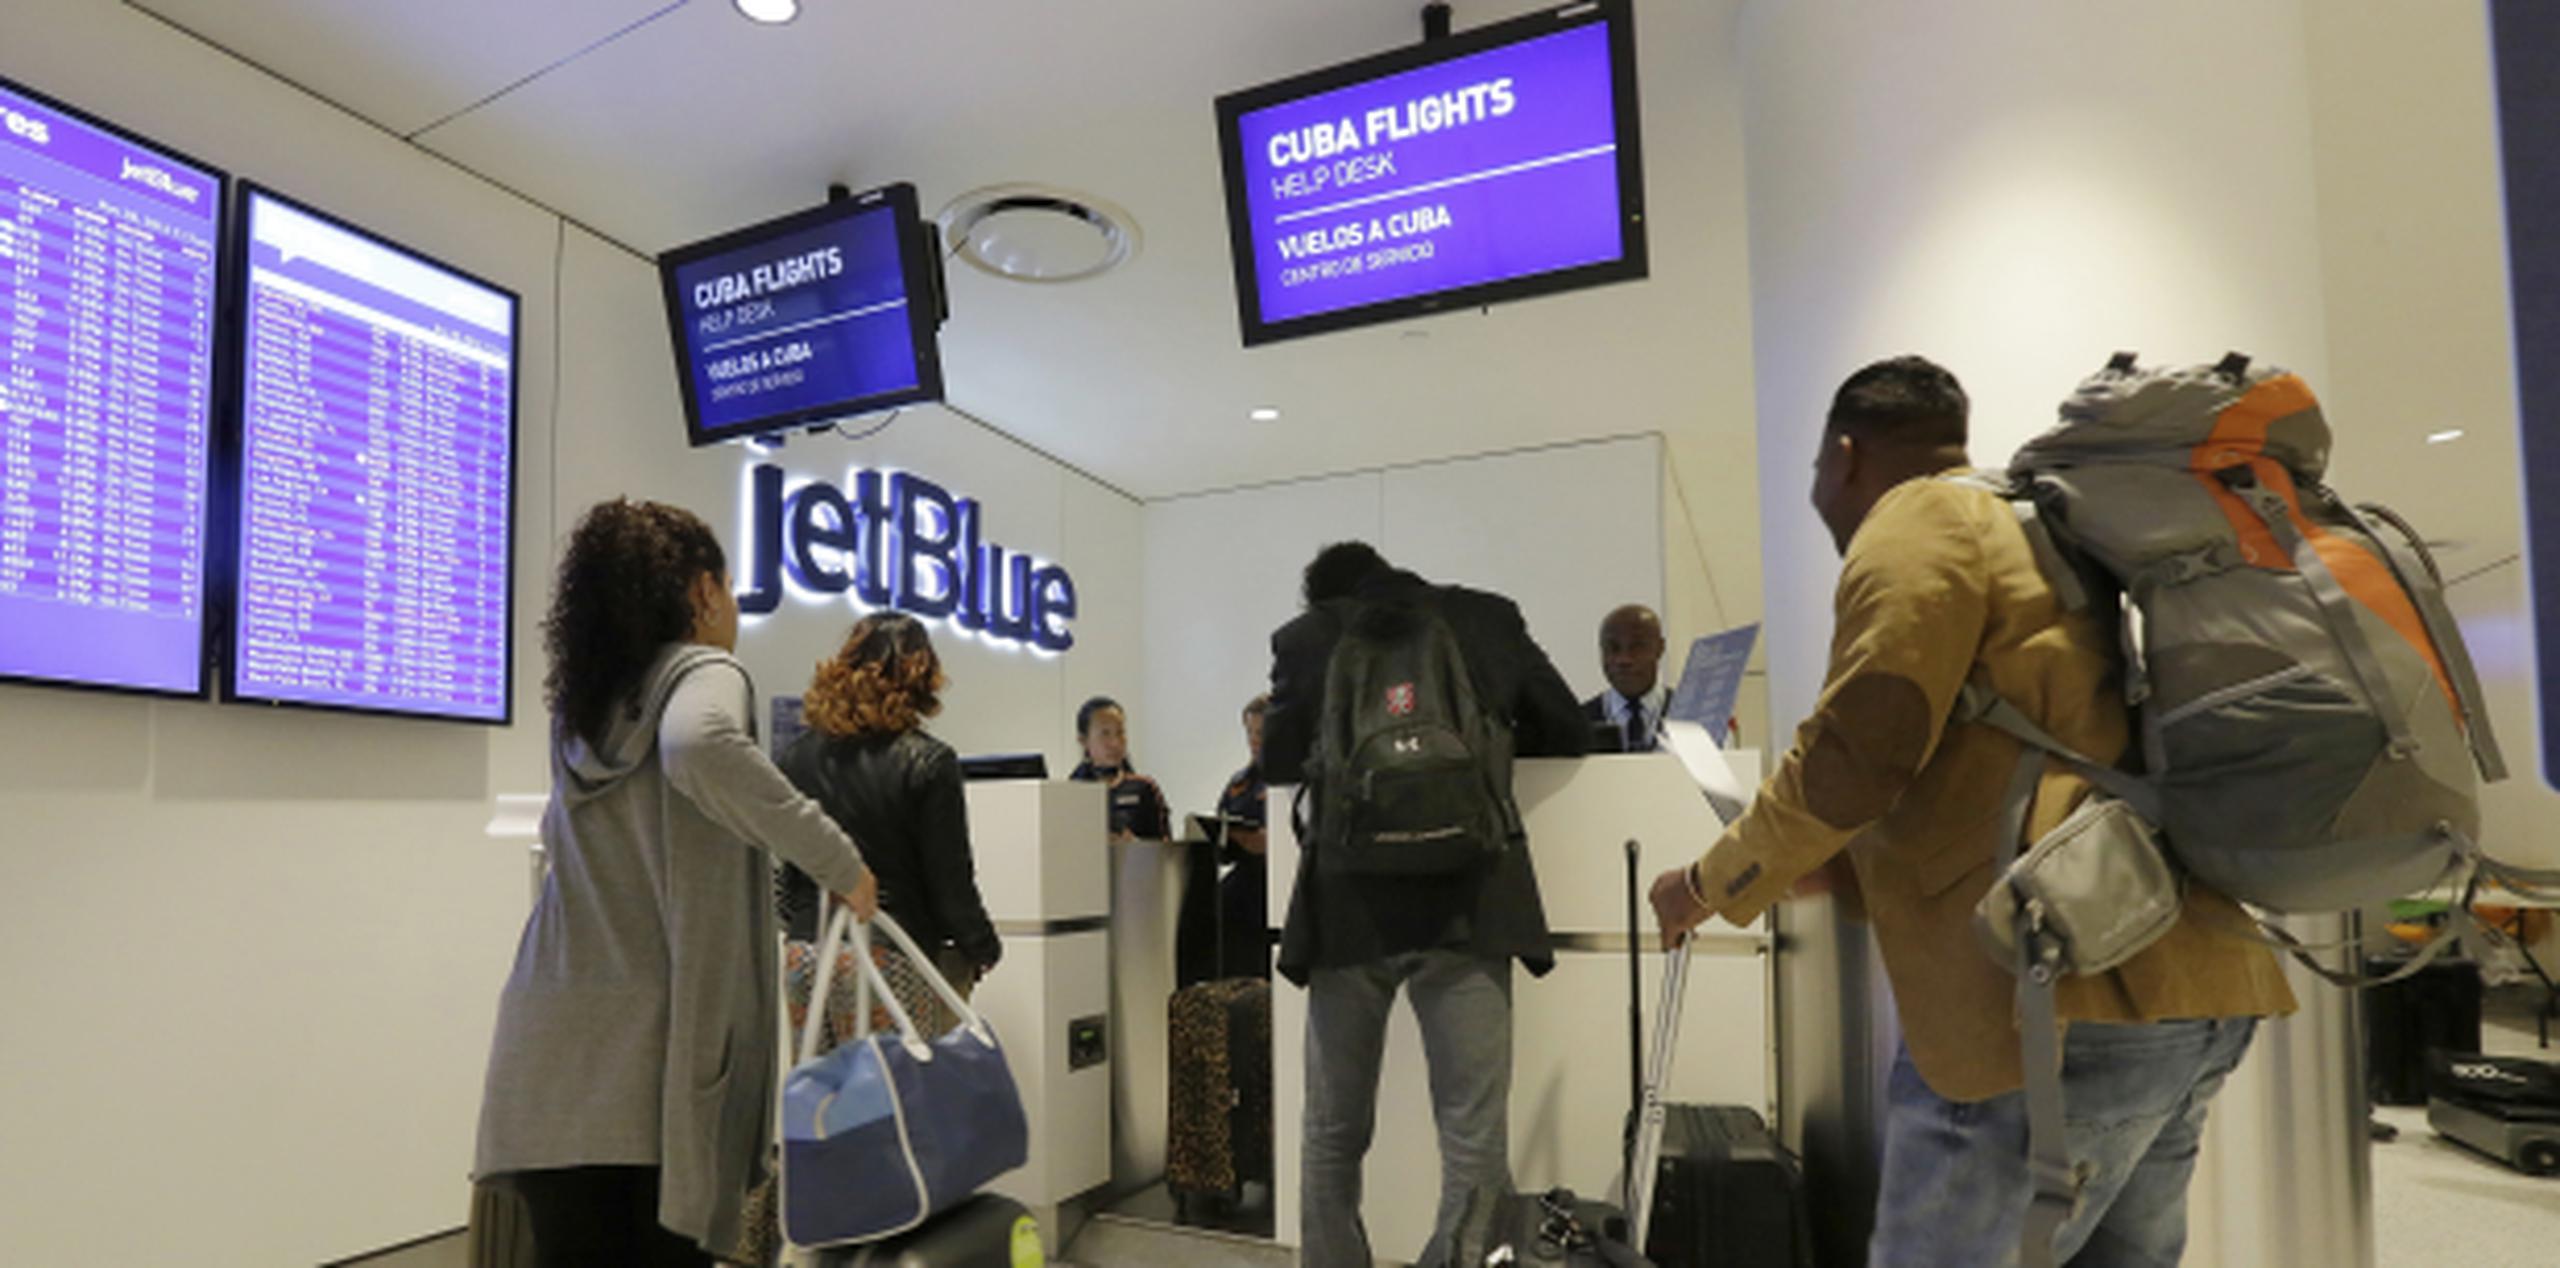 Pasajeros abordan al vuelo inaugural de Jetblue a Cuba desde Fort Lauderdale. (Prensa Asociada)